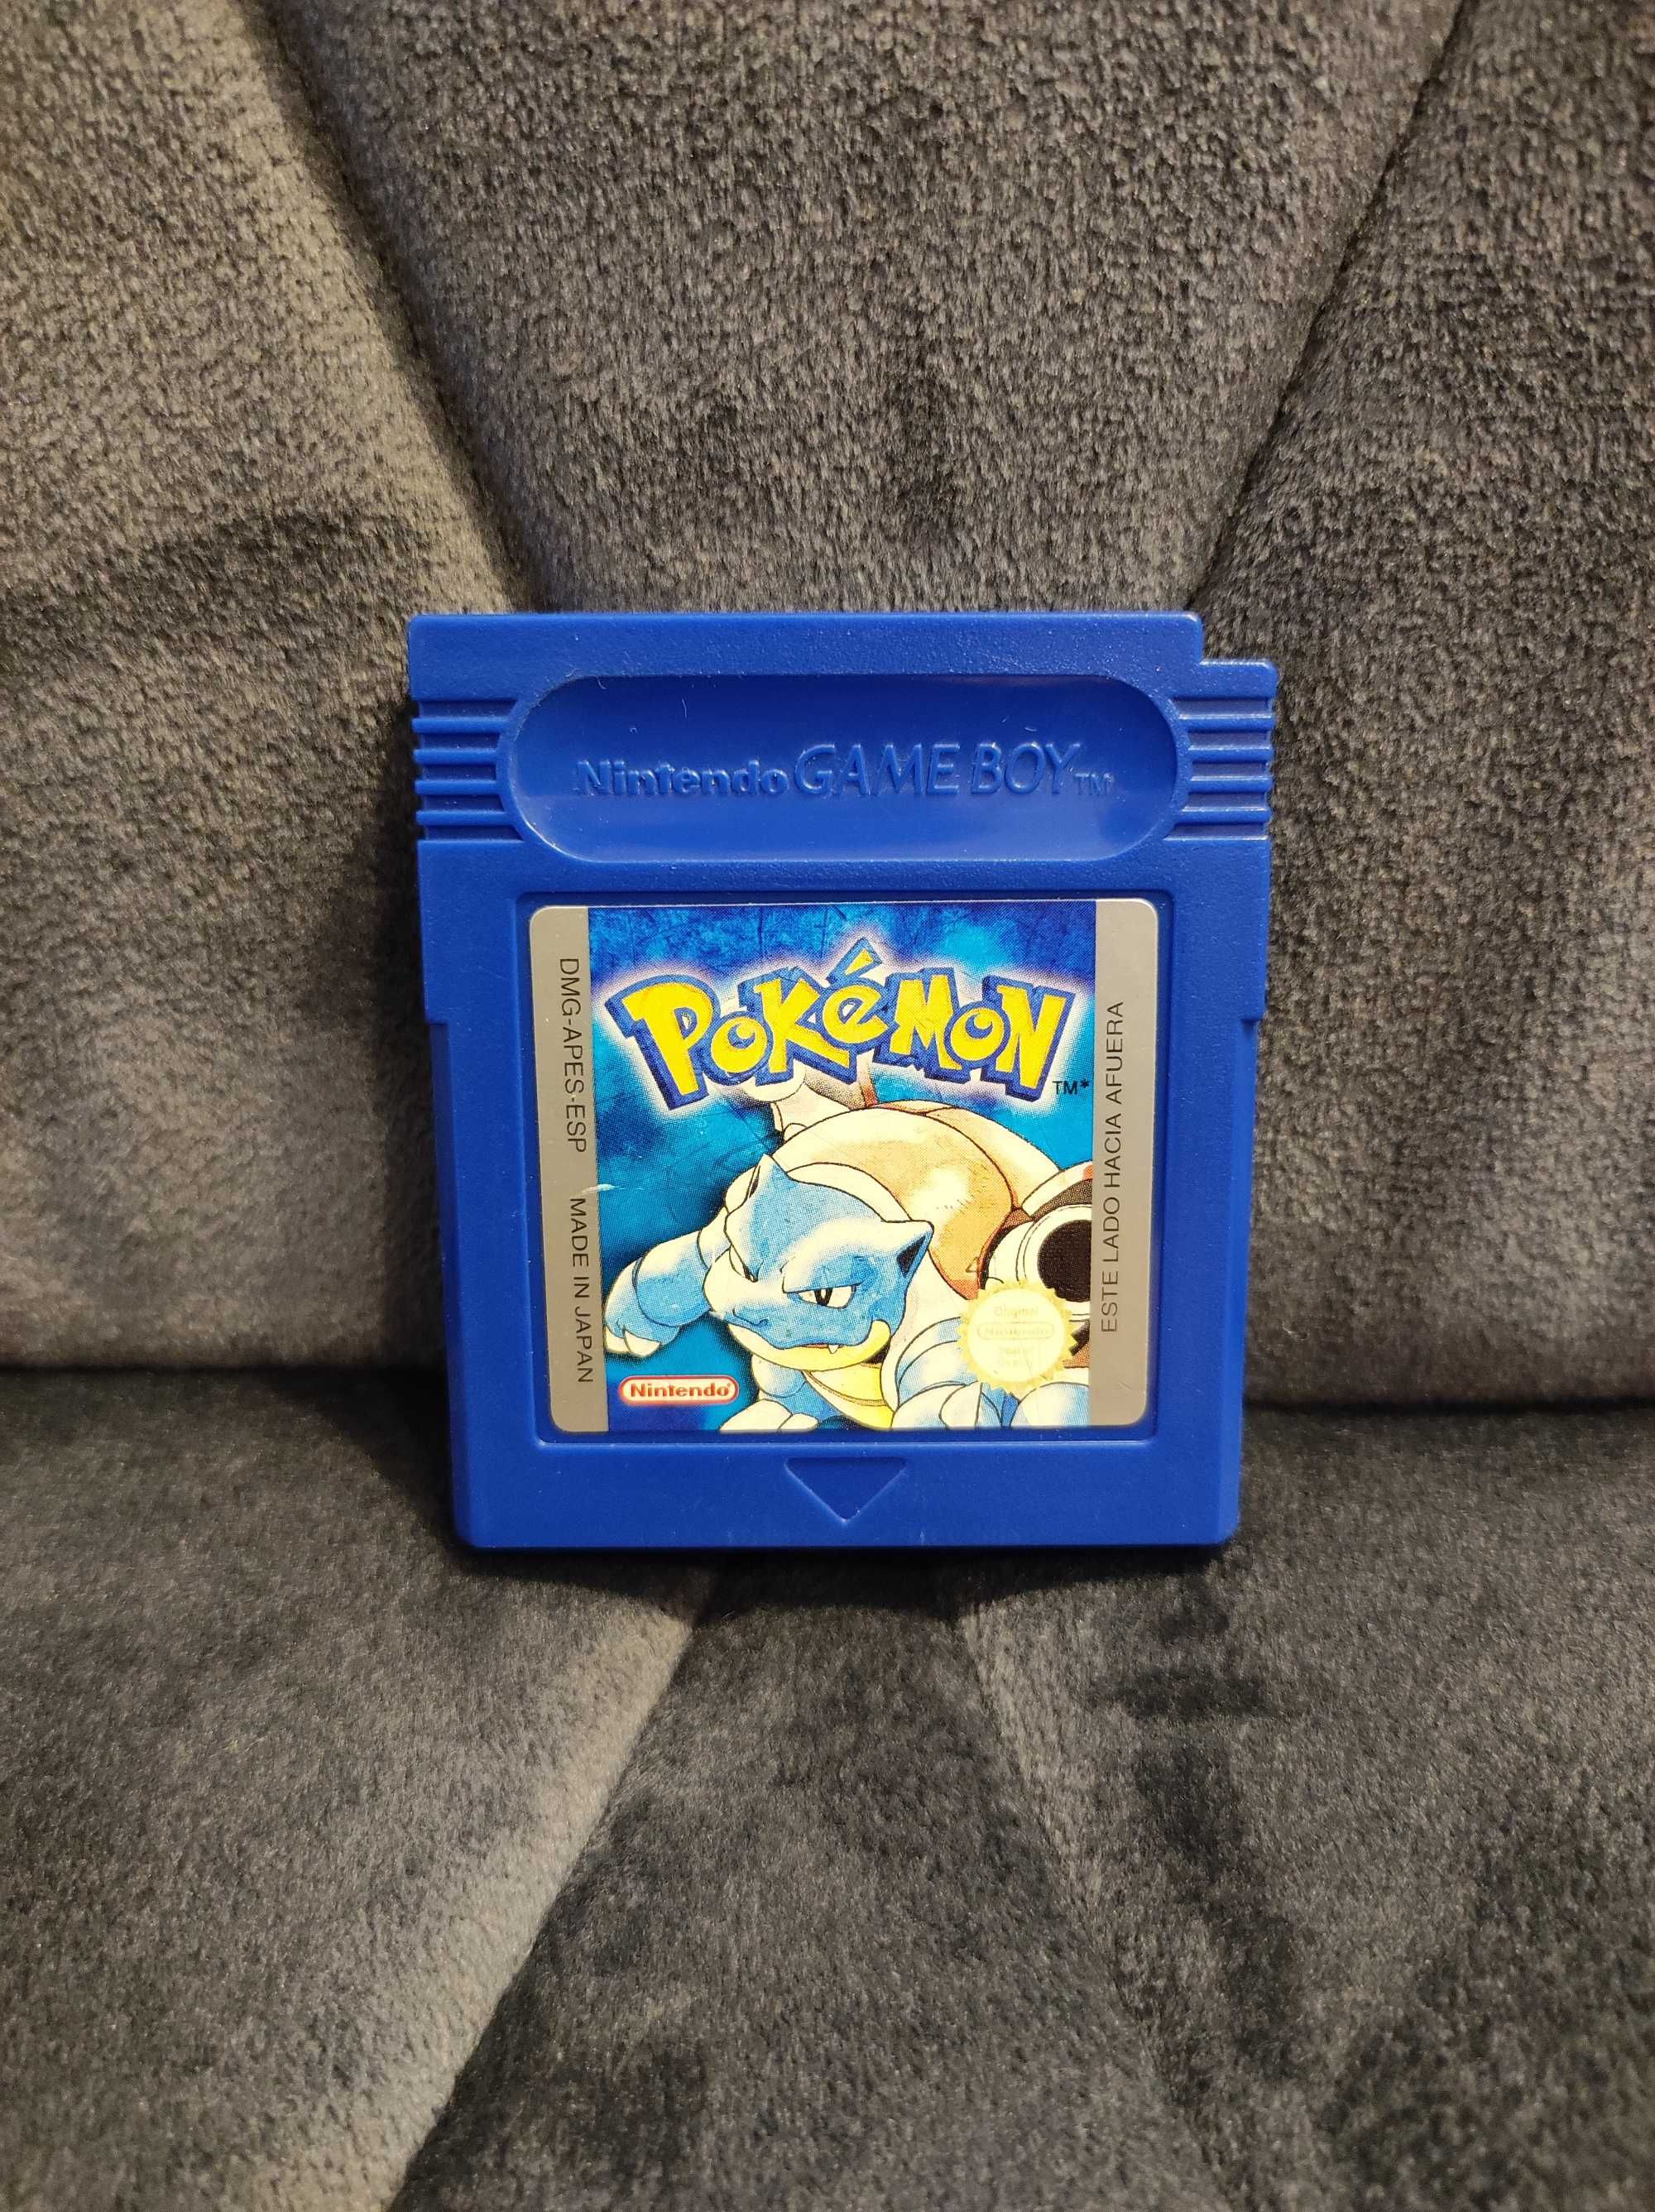 Pokemon Blue Version | Gameboy | eraRetro